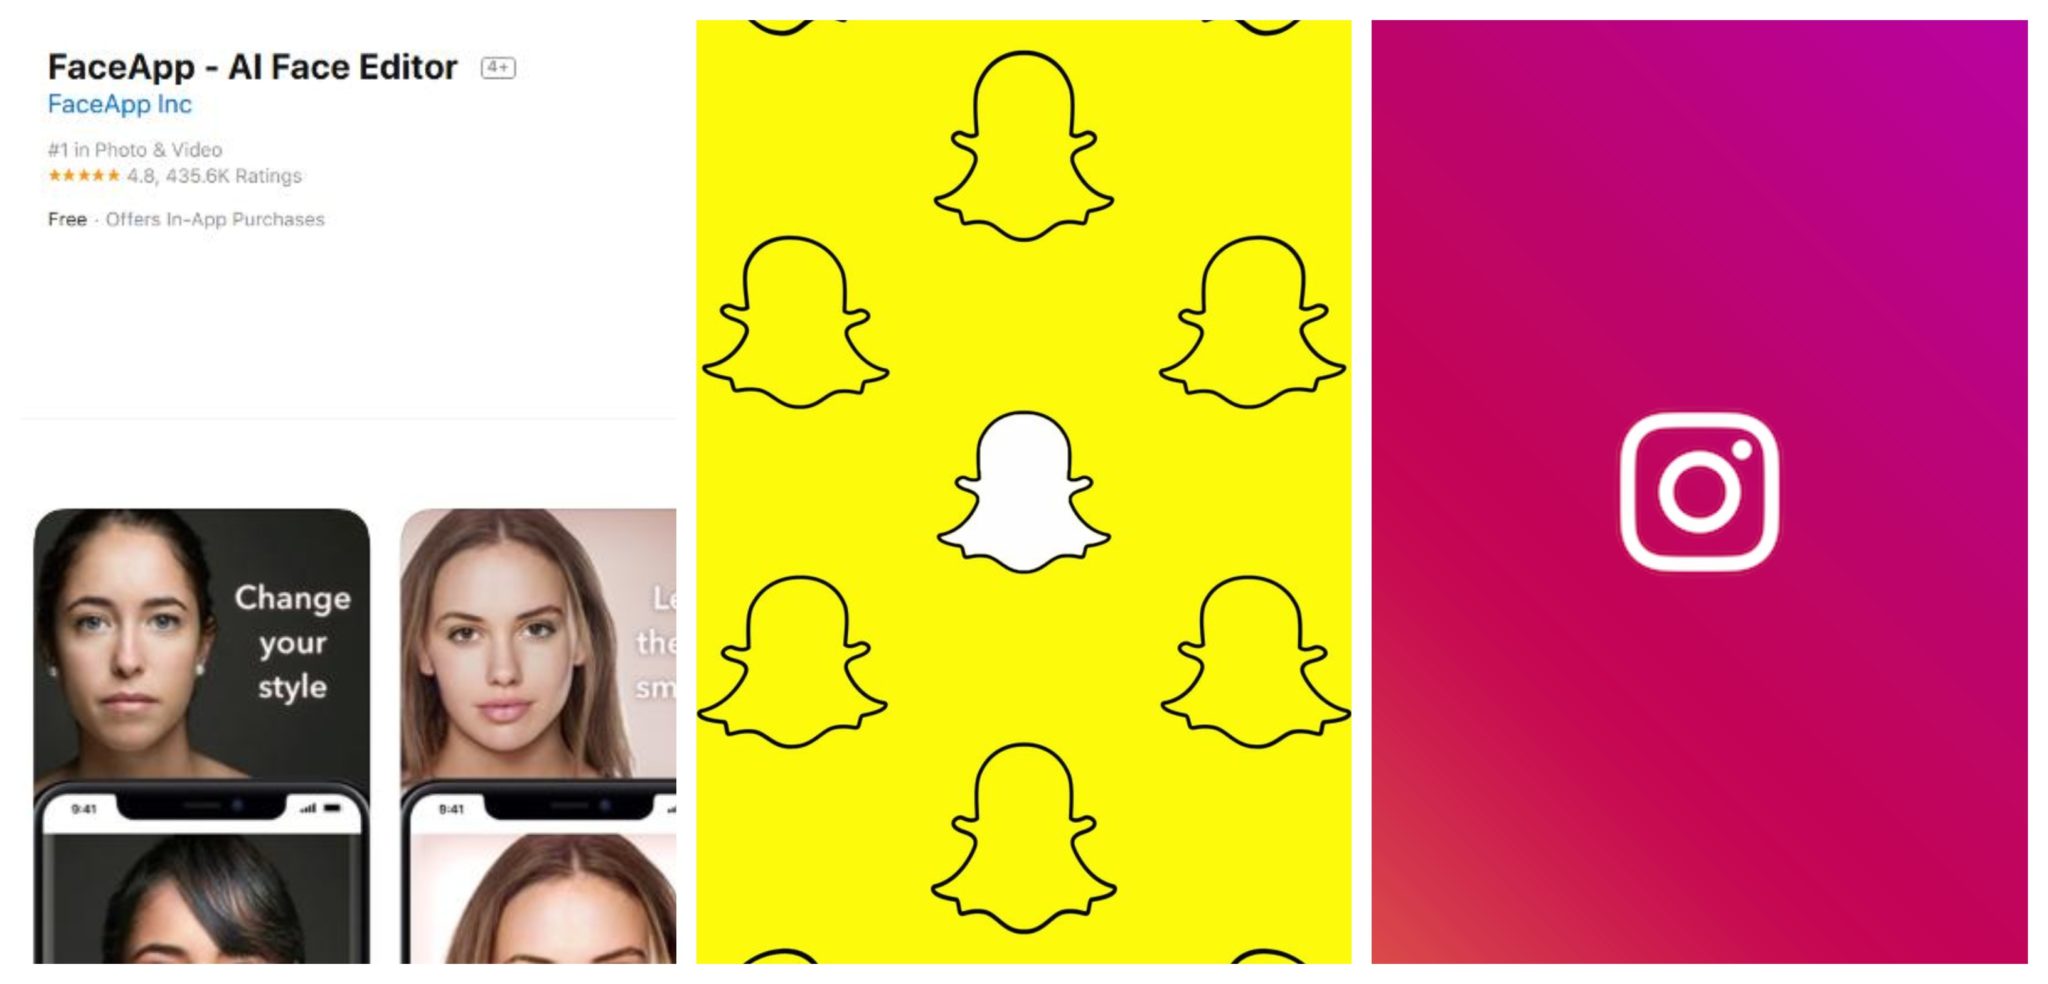 faceapp snapchat instagram gegevens stelen